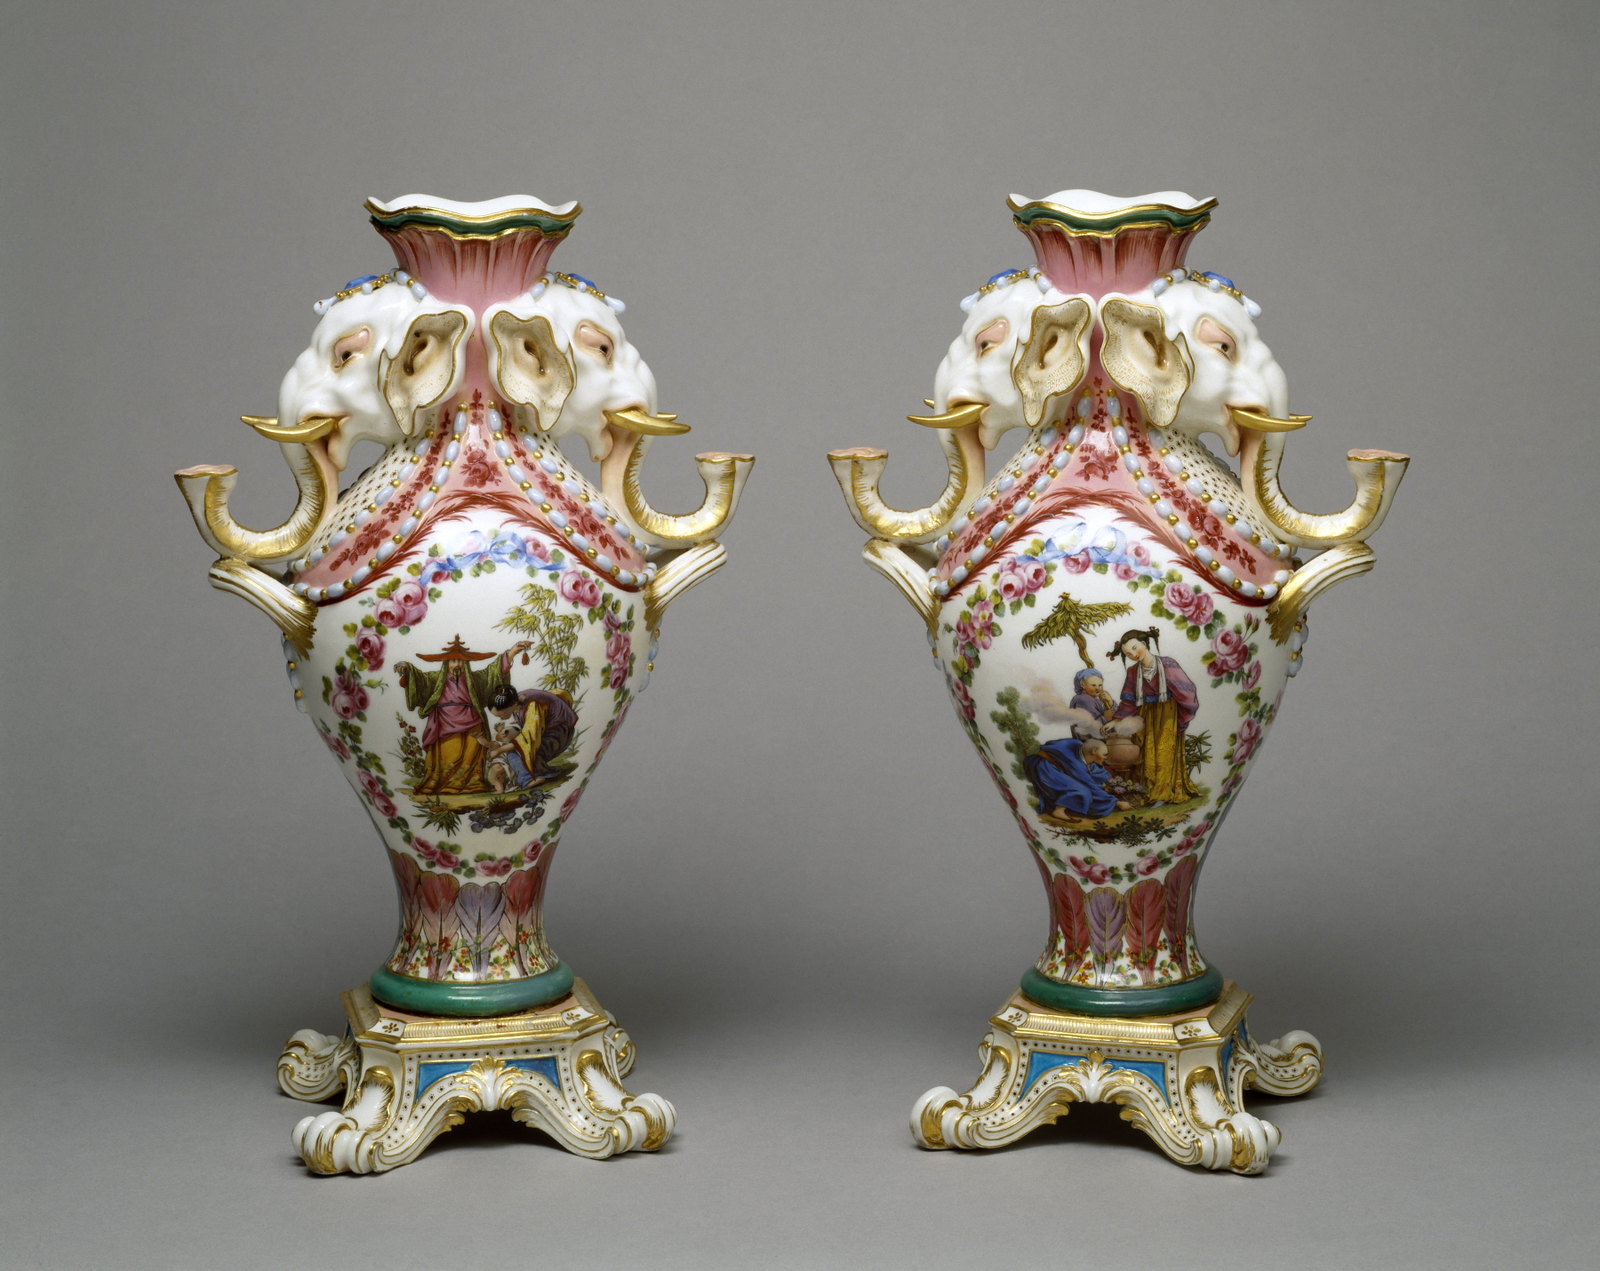 Pair of Vases. Charles Nicolas Dodin, Sèvres, France, 1760. Walters Art Museum